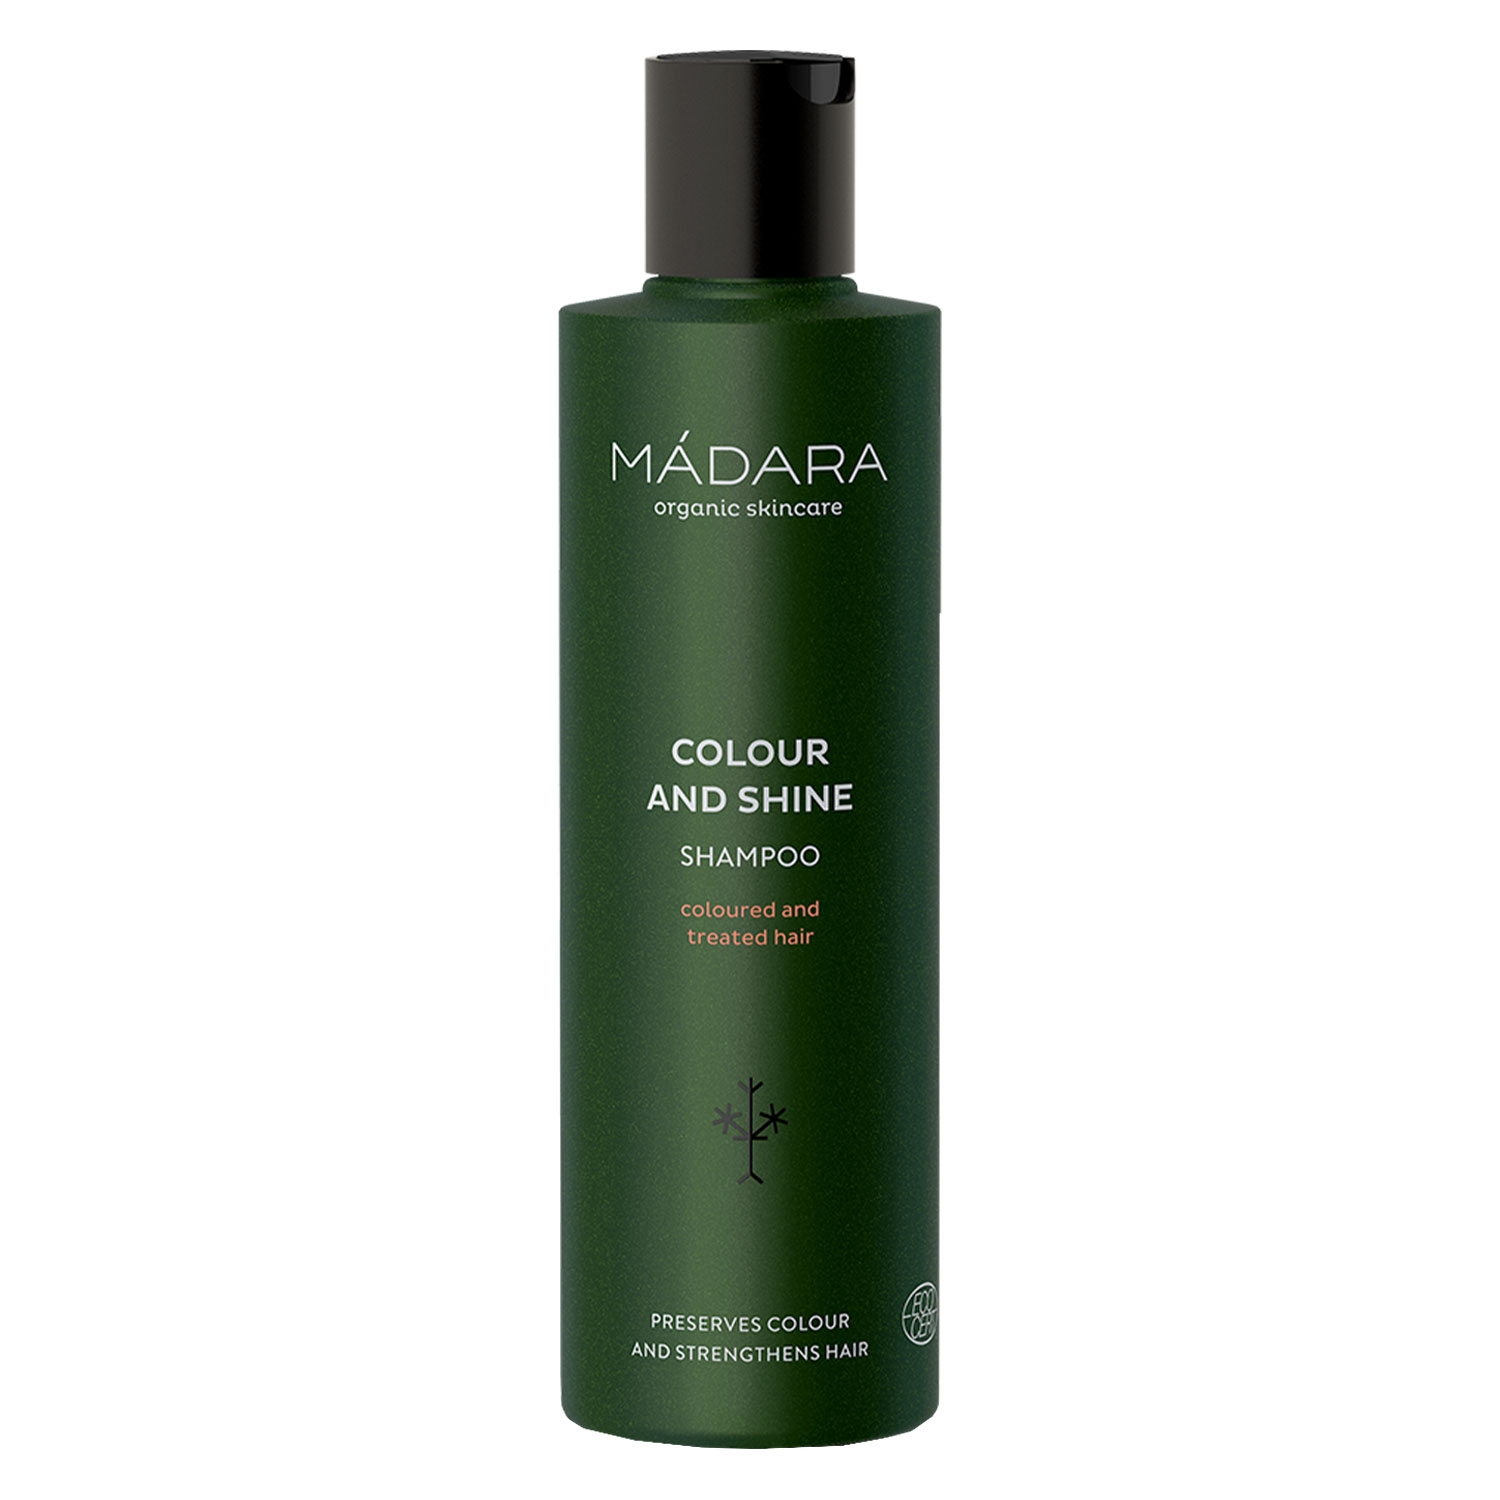 Produktbild von MÁDARA Hair Care - Colour and Shine Shampoo